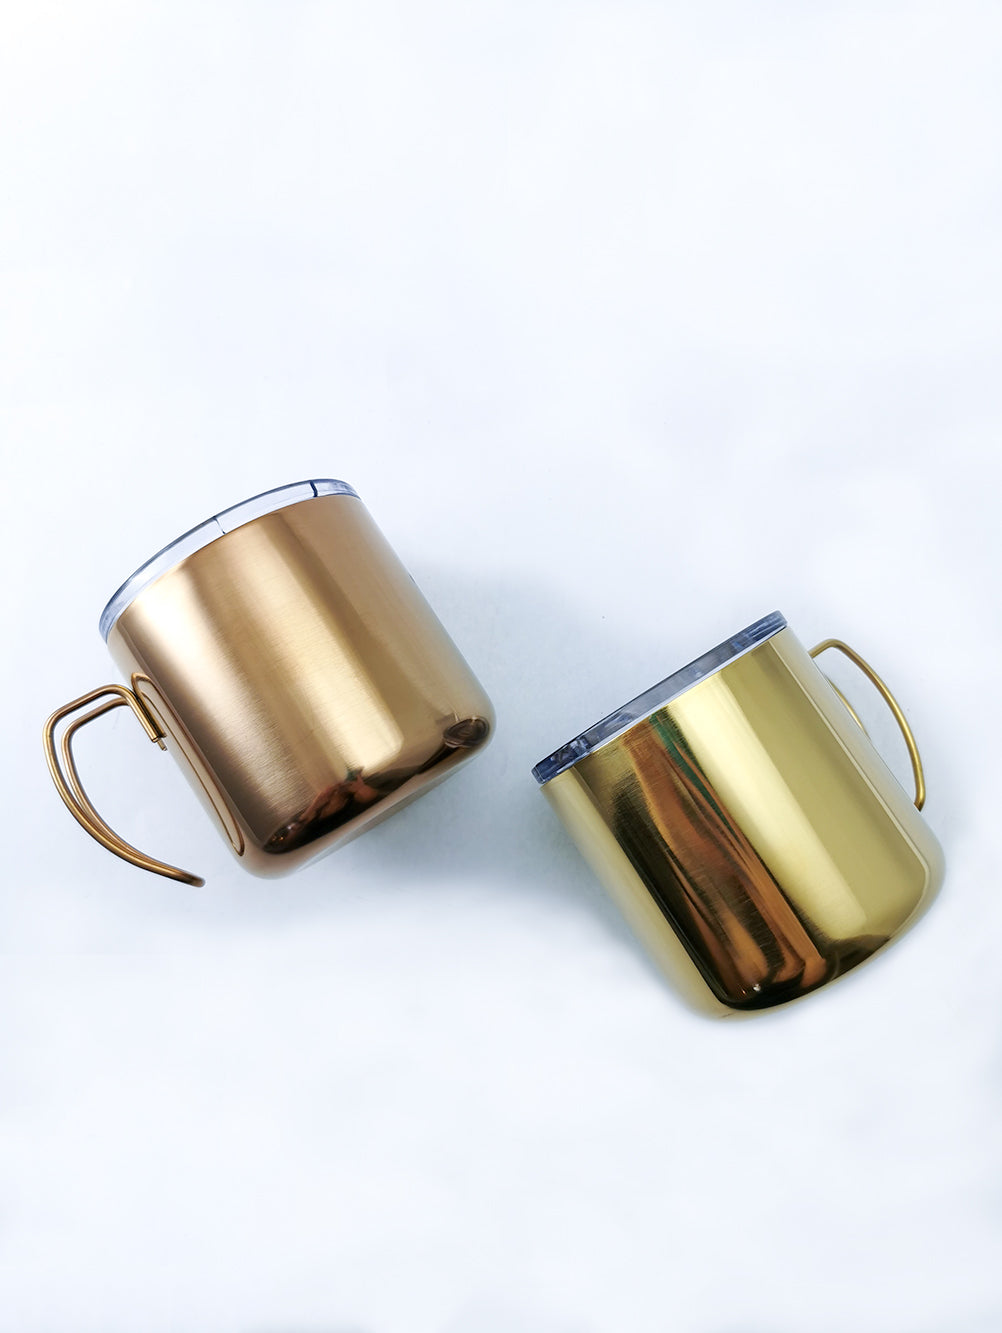 BREU Coffee Mug - Double Wall 304 Stainless Steel Coffee Mug - Gold - Gifts by Art Tree